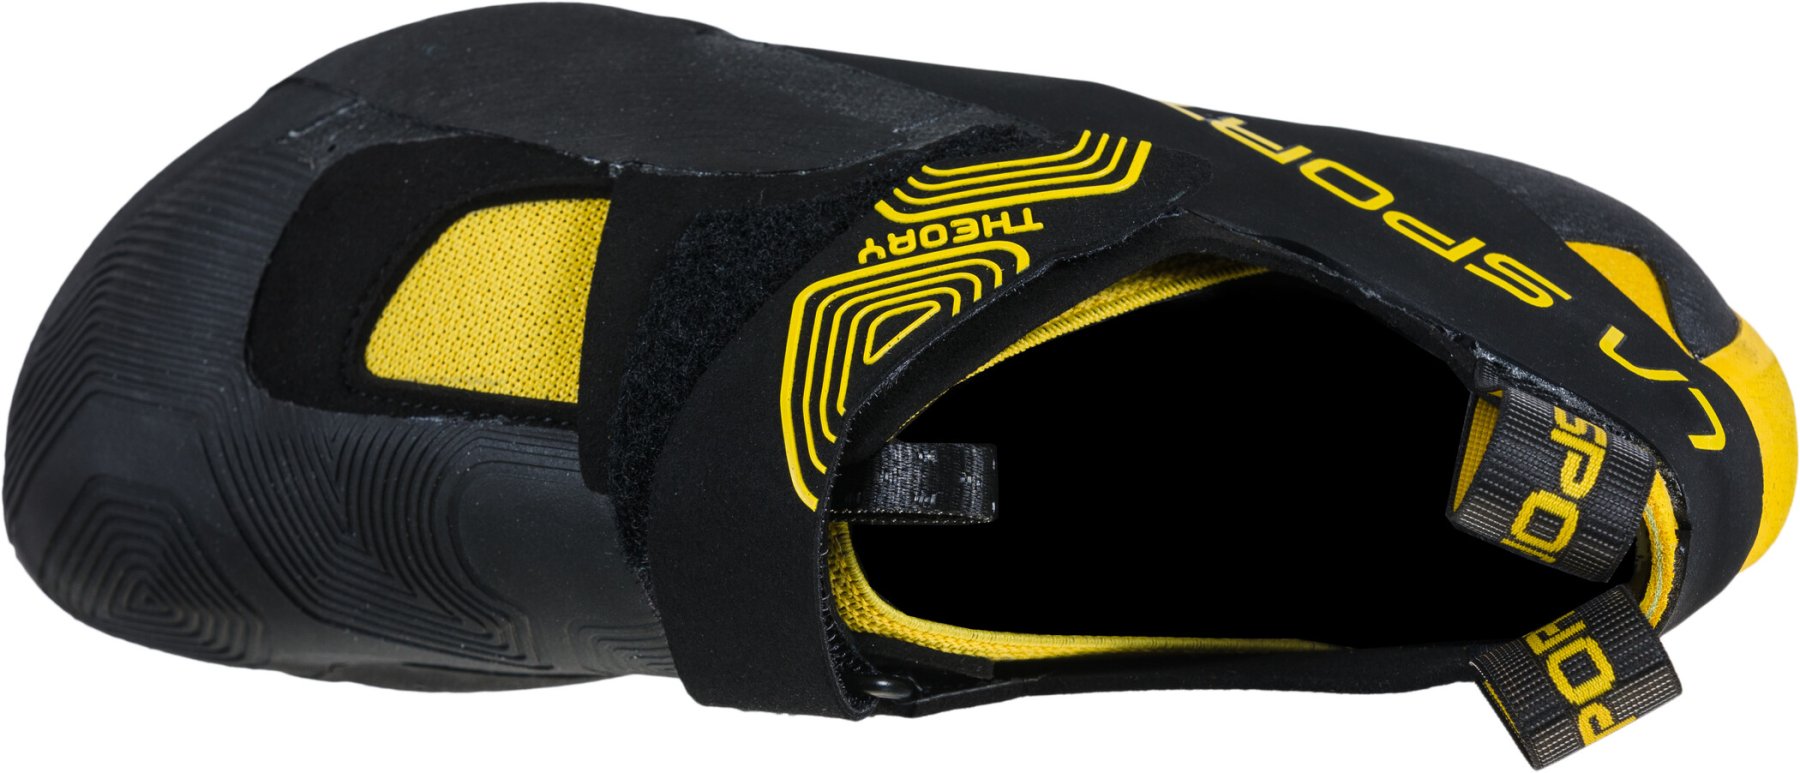 Theory men's - black/yellow, climbing shoes